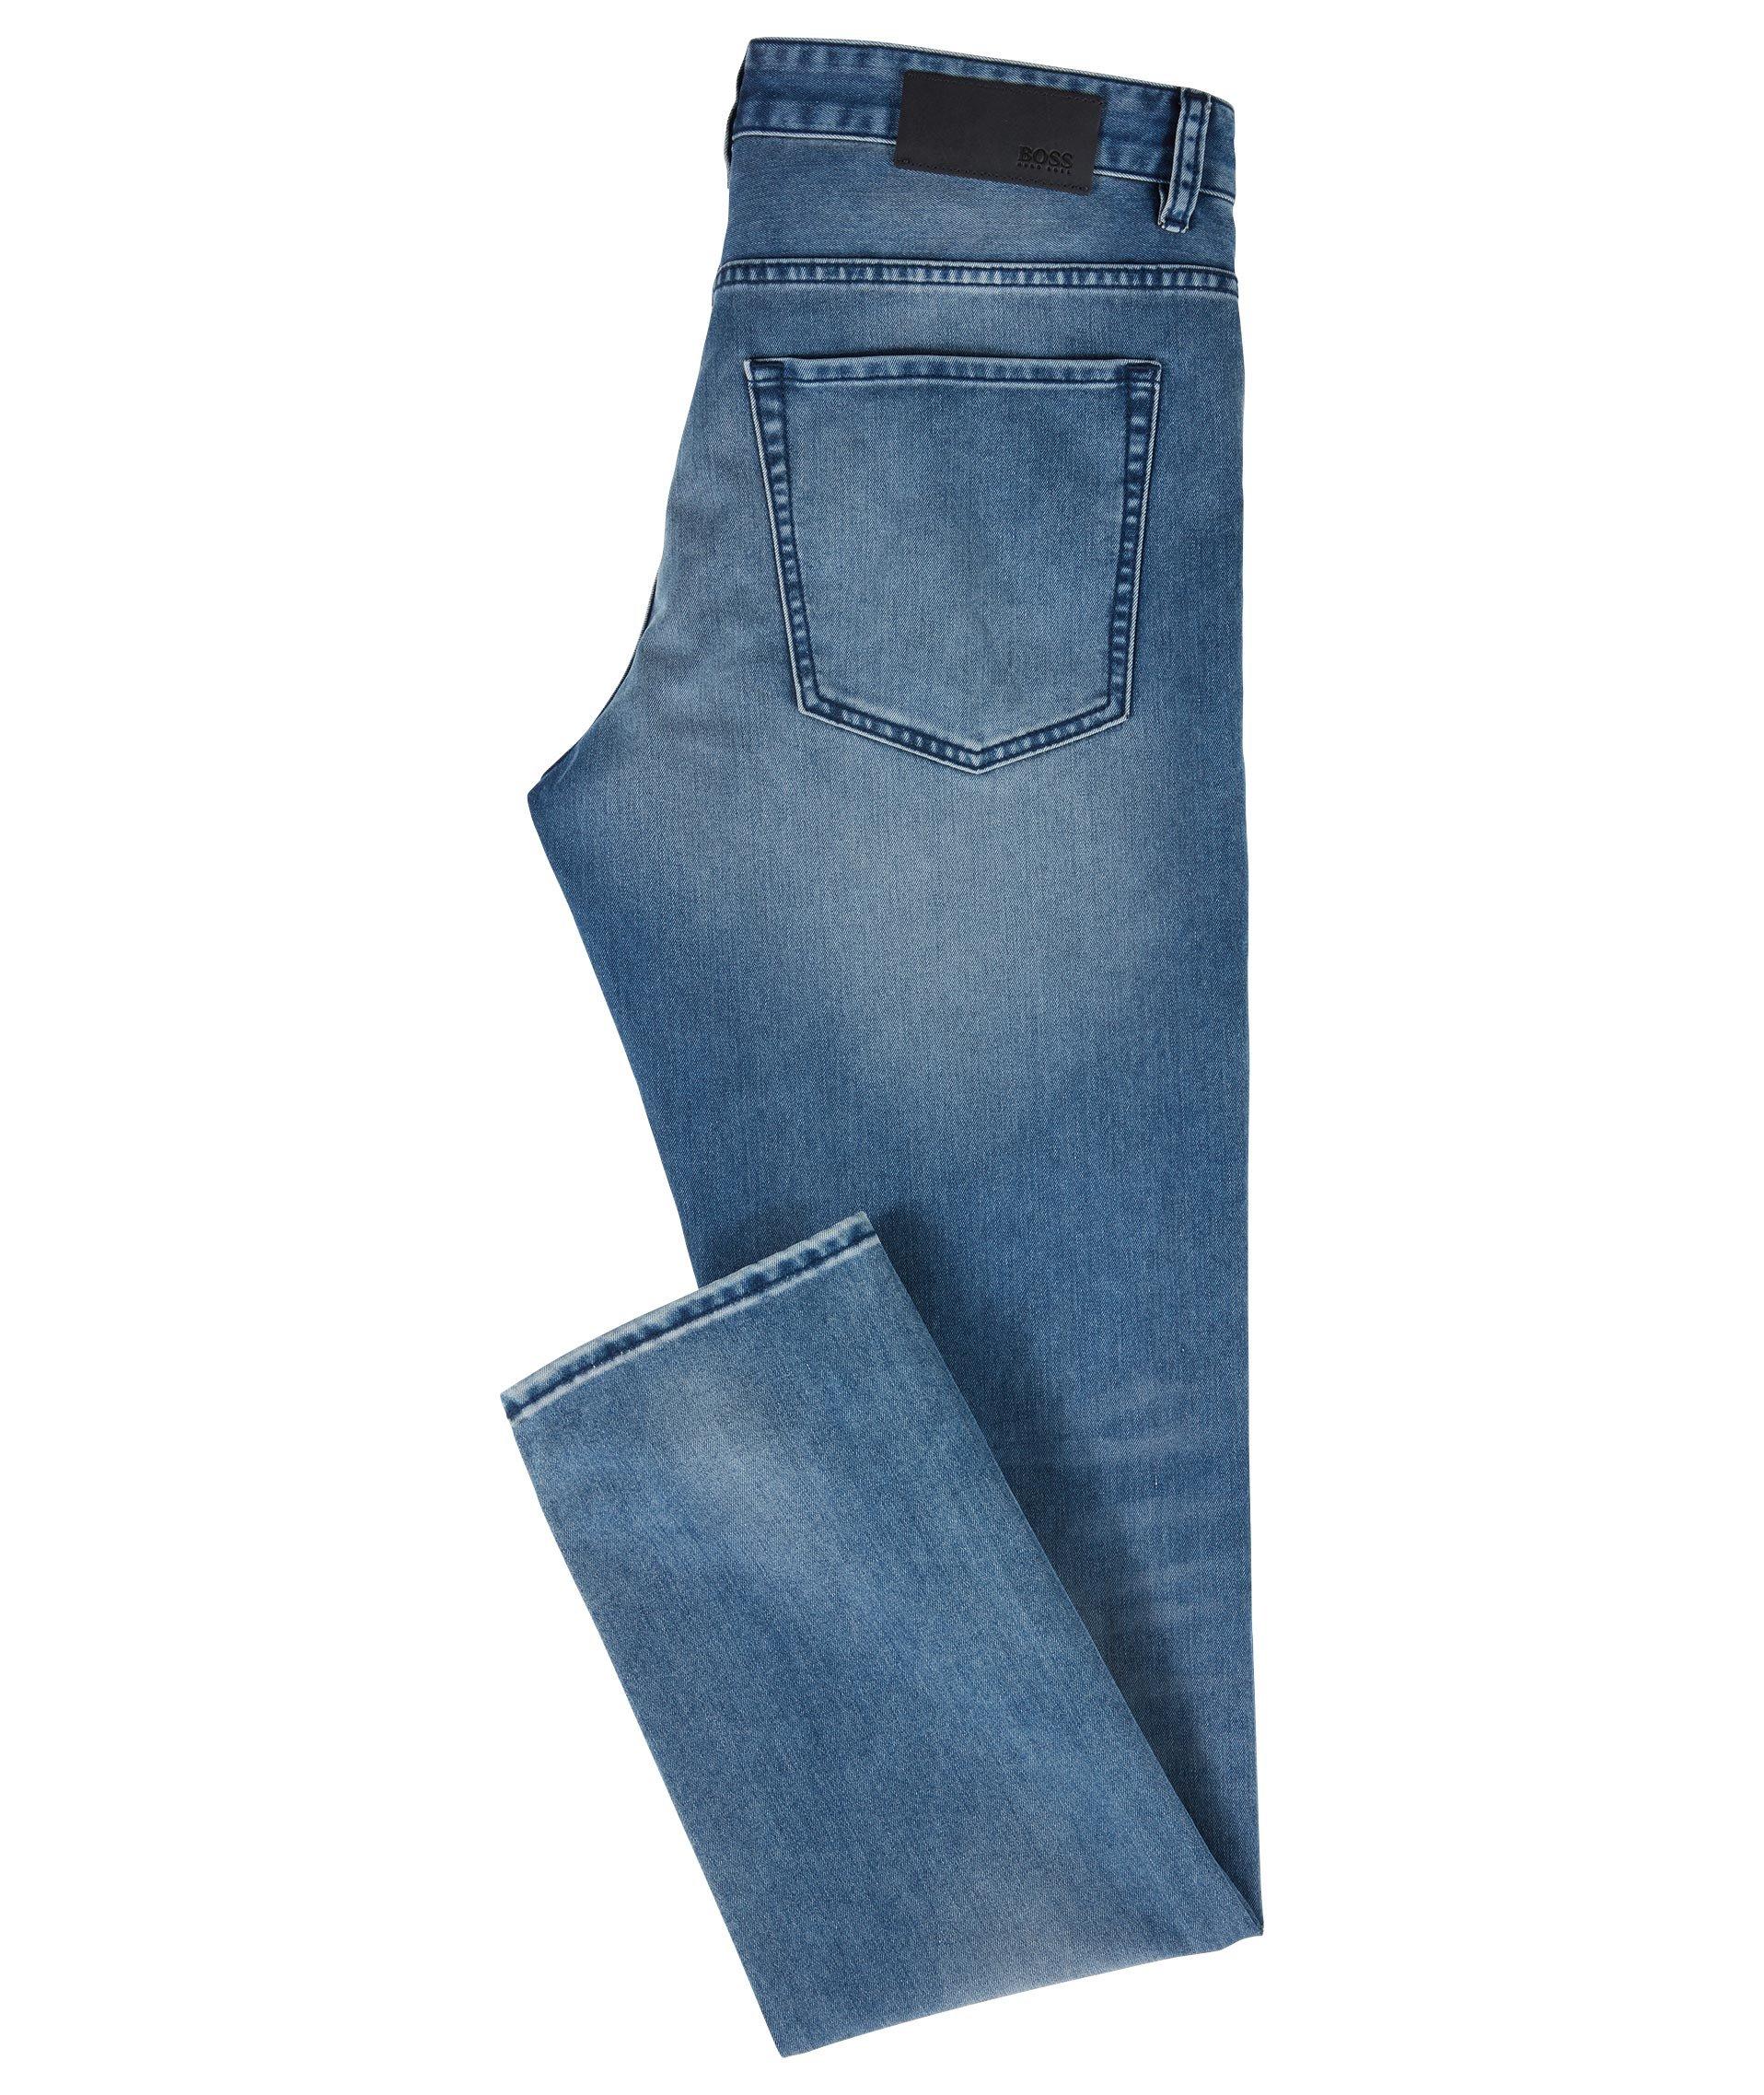 Delaware Slim Fit Jeans image 0